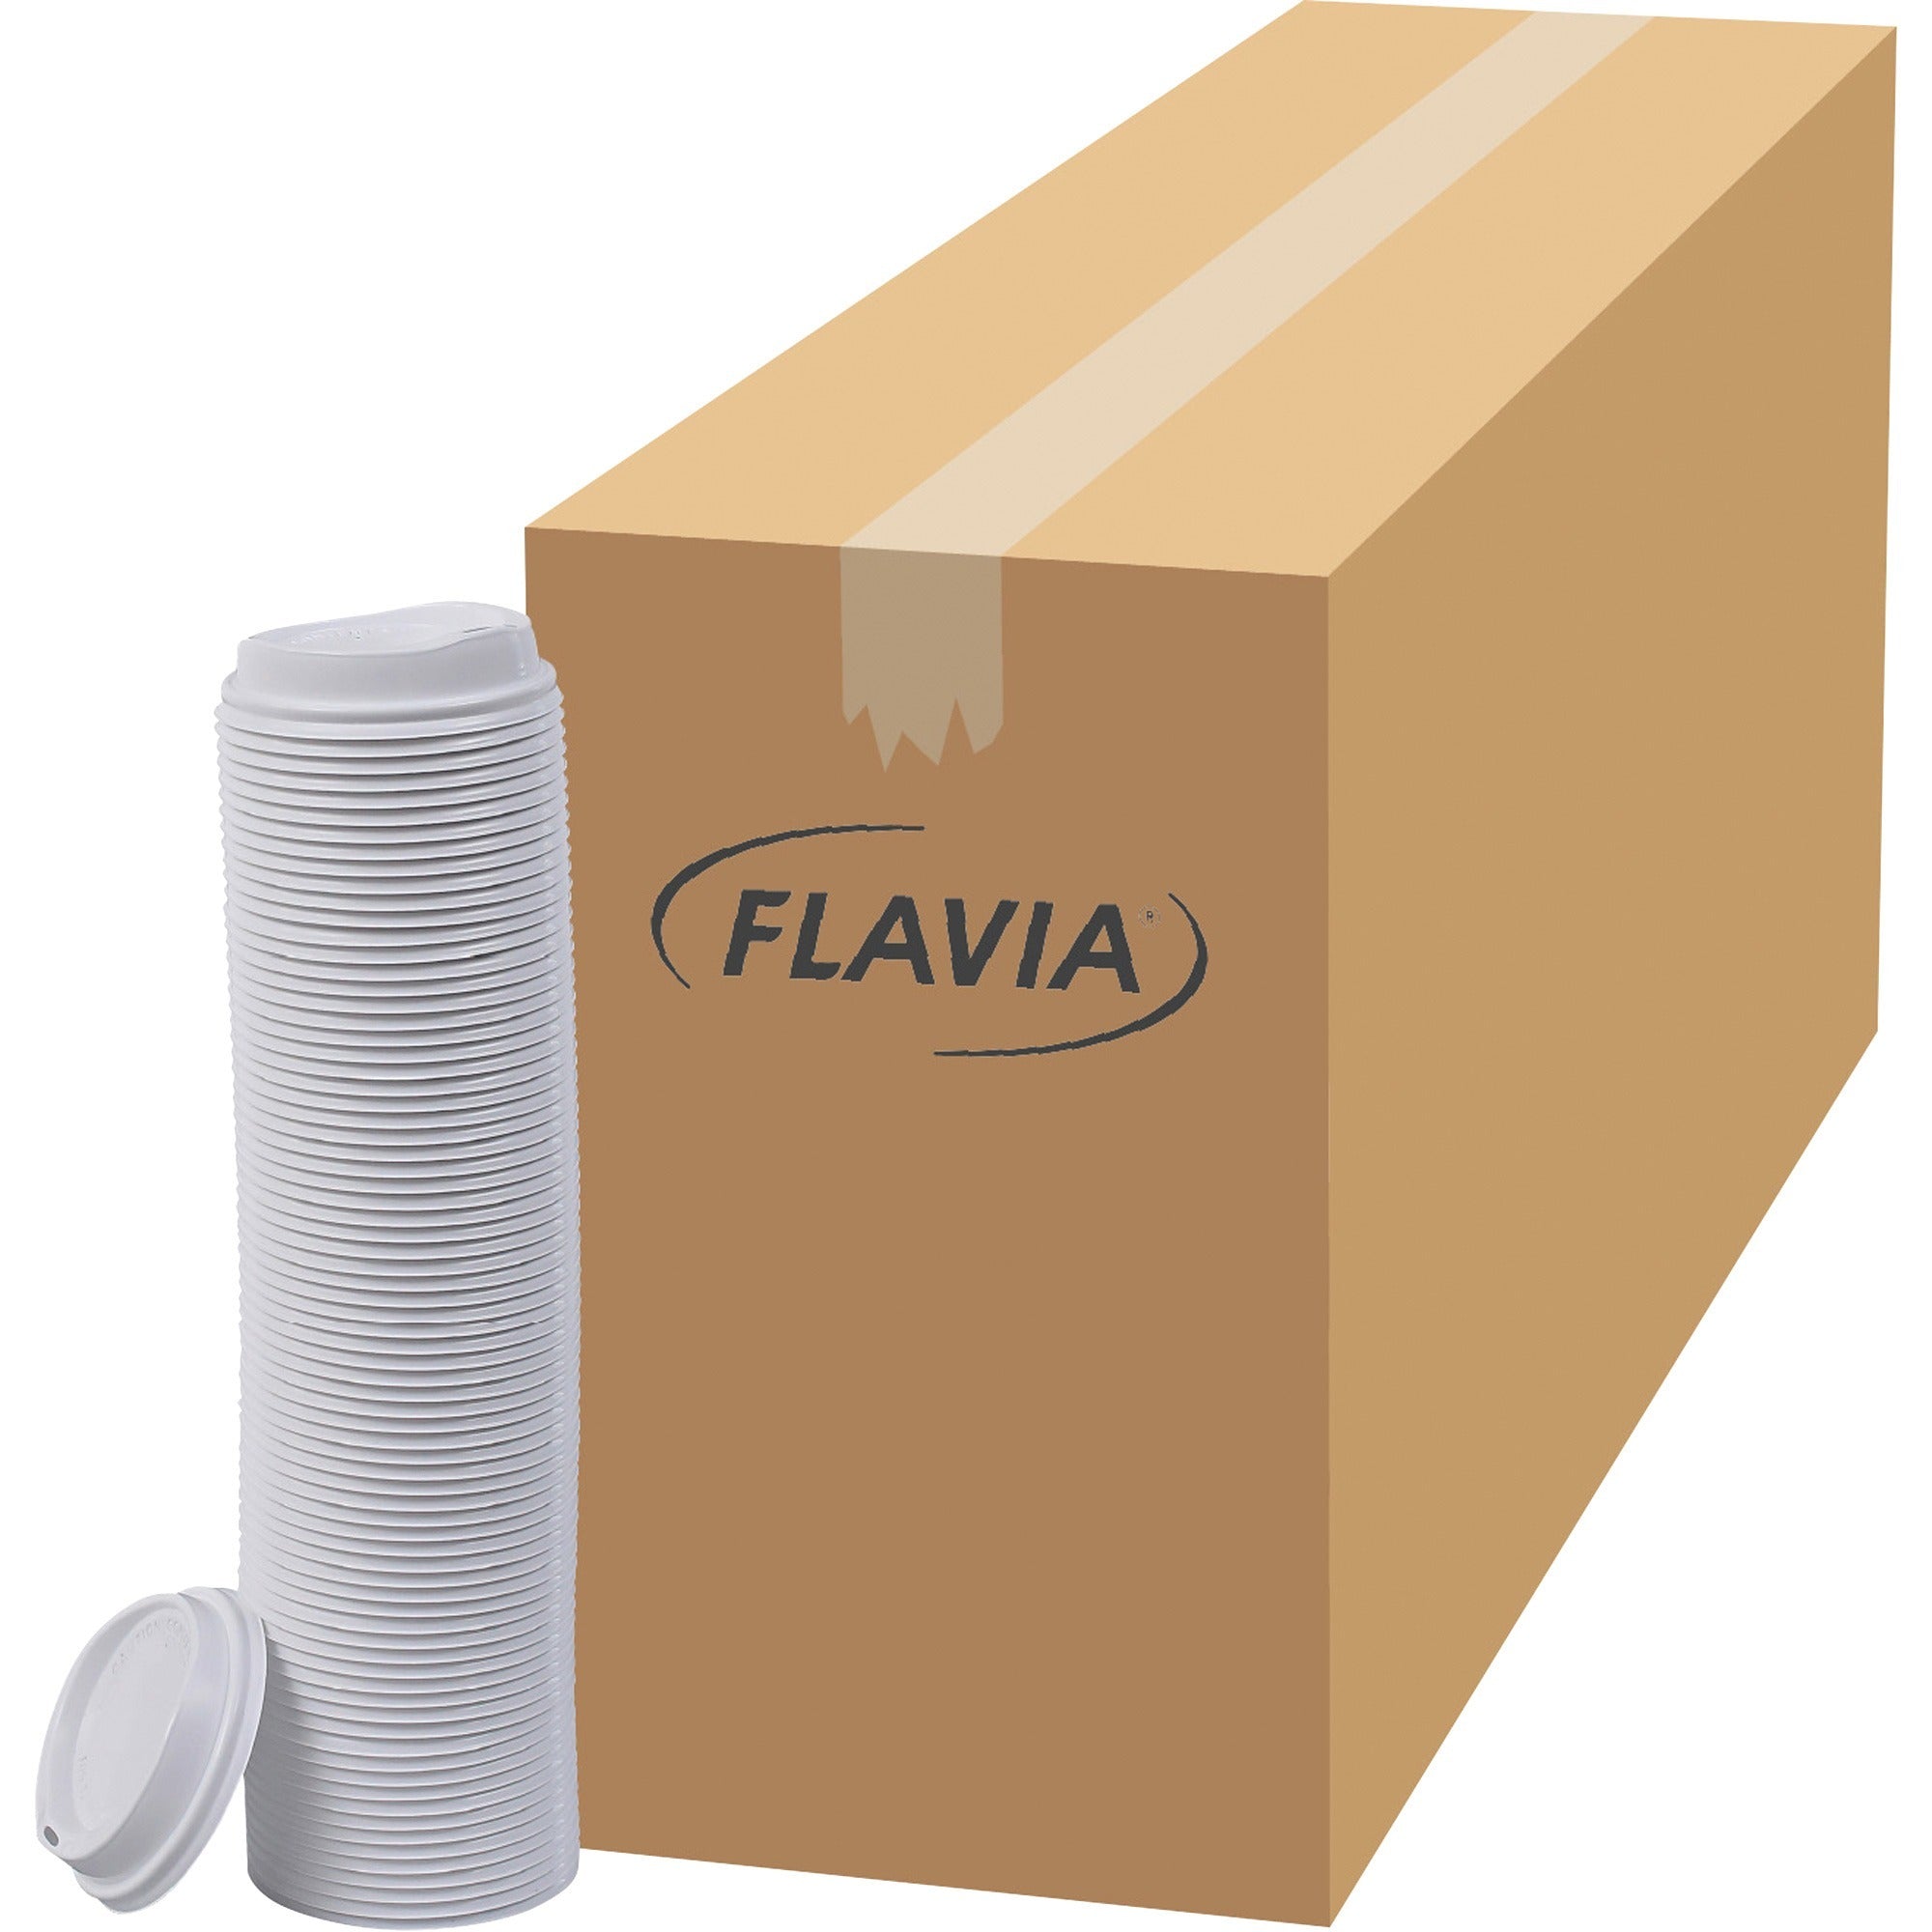 flavia-10-oz-hot-beverage-paper-cup-lids-1000-carton-white-paper-beverage-hot-drink_lav25200019 - 1